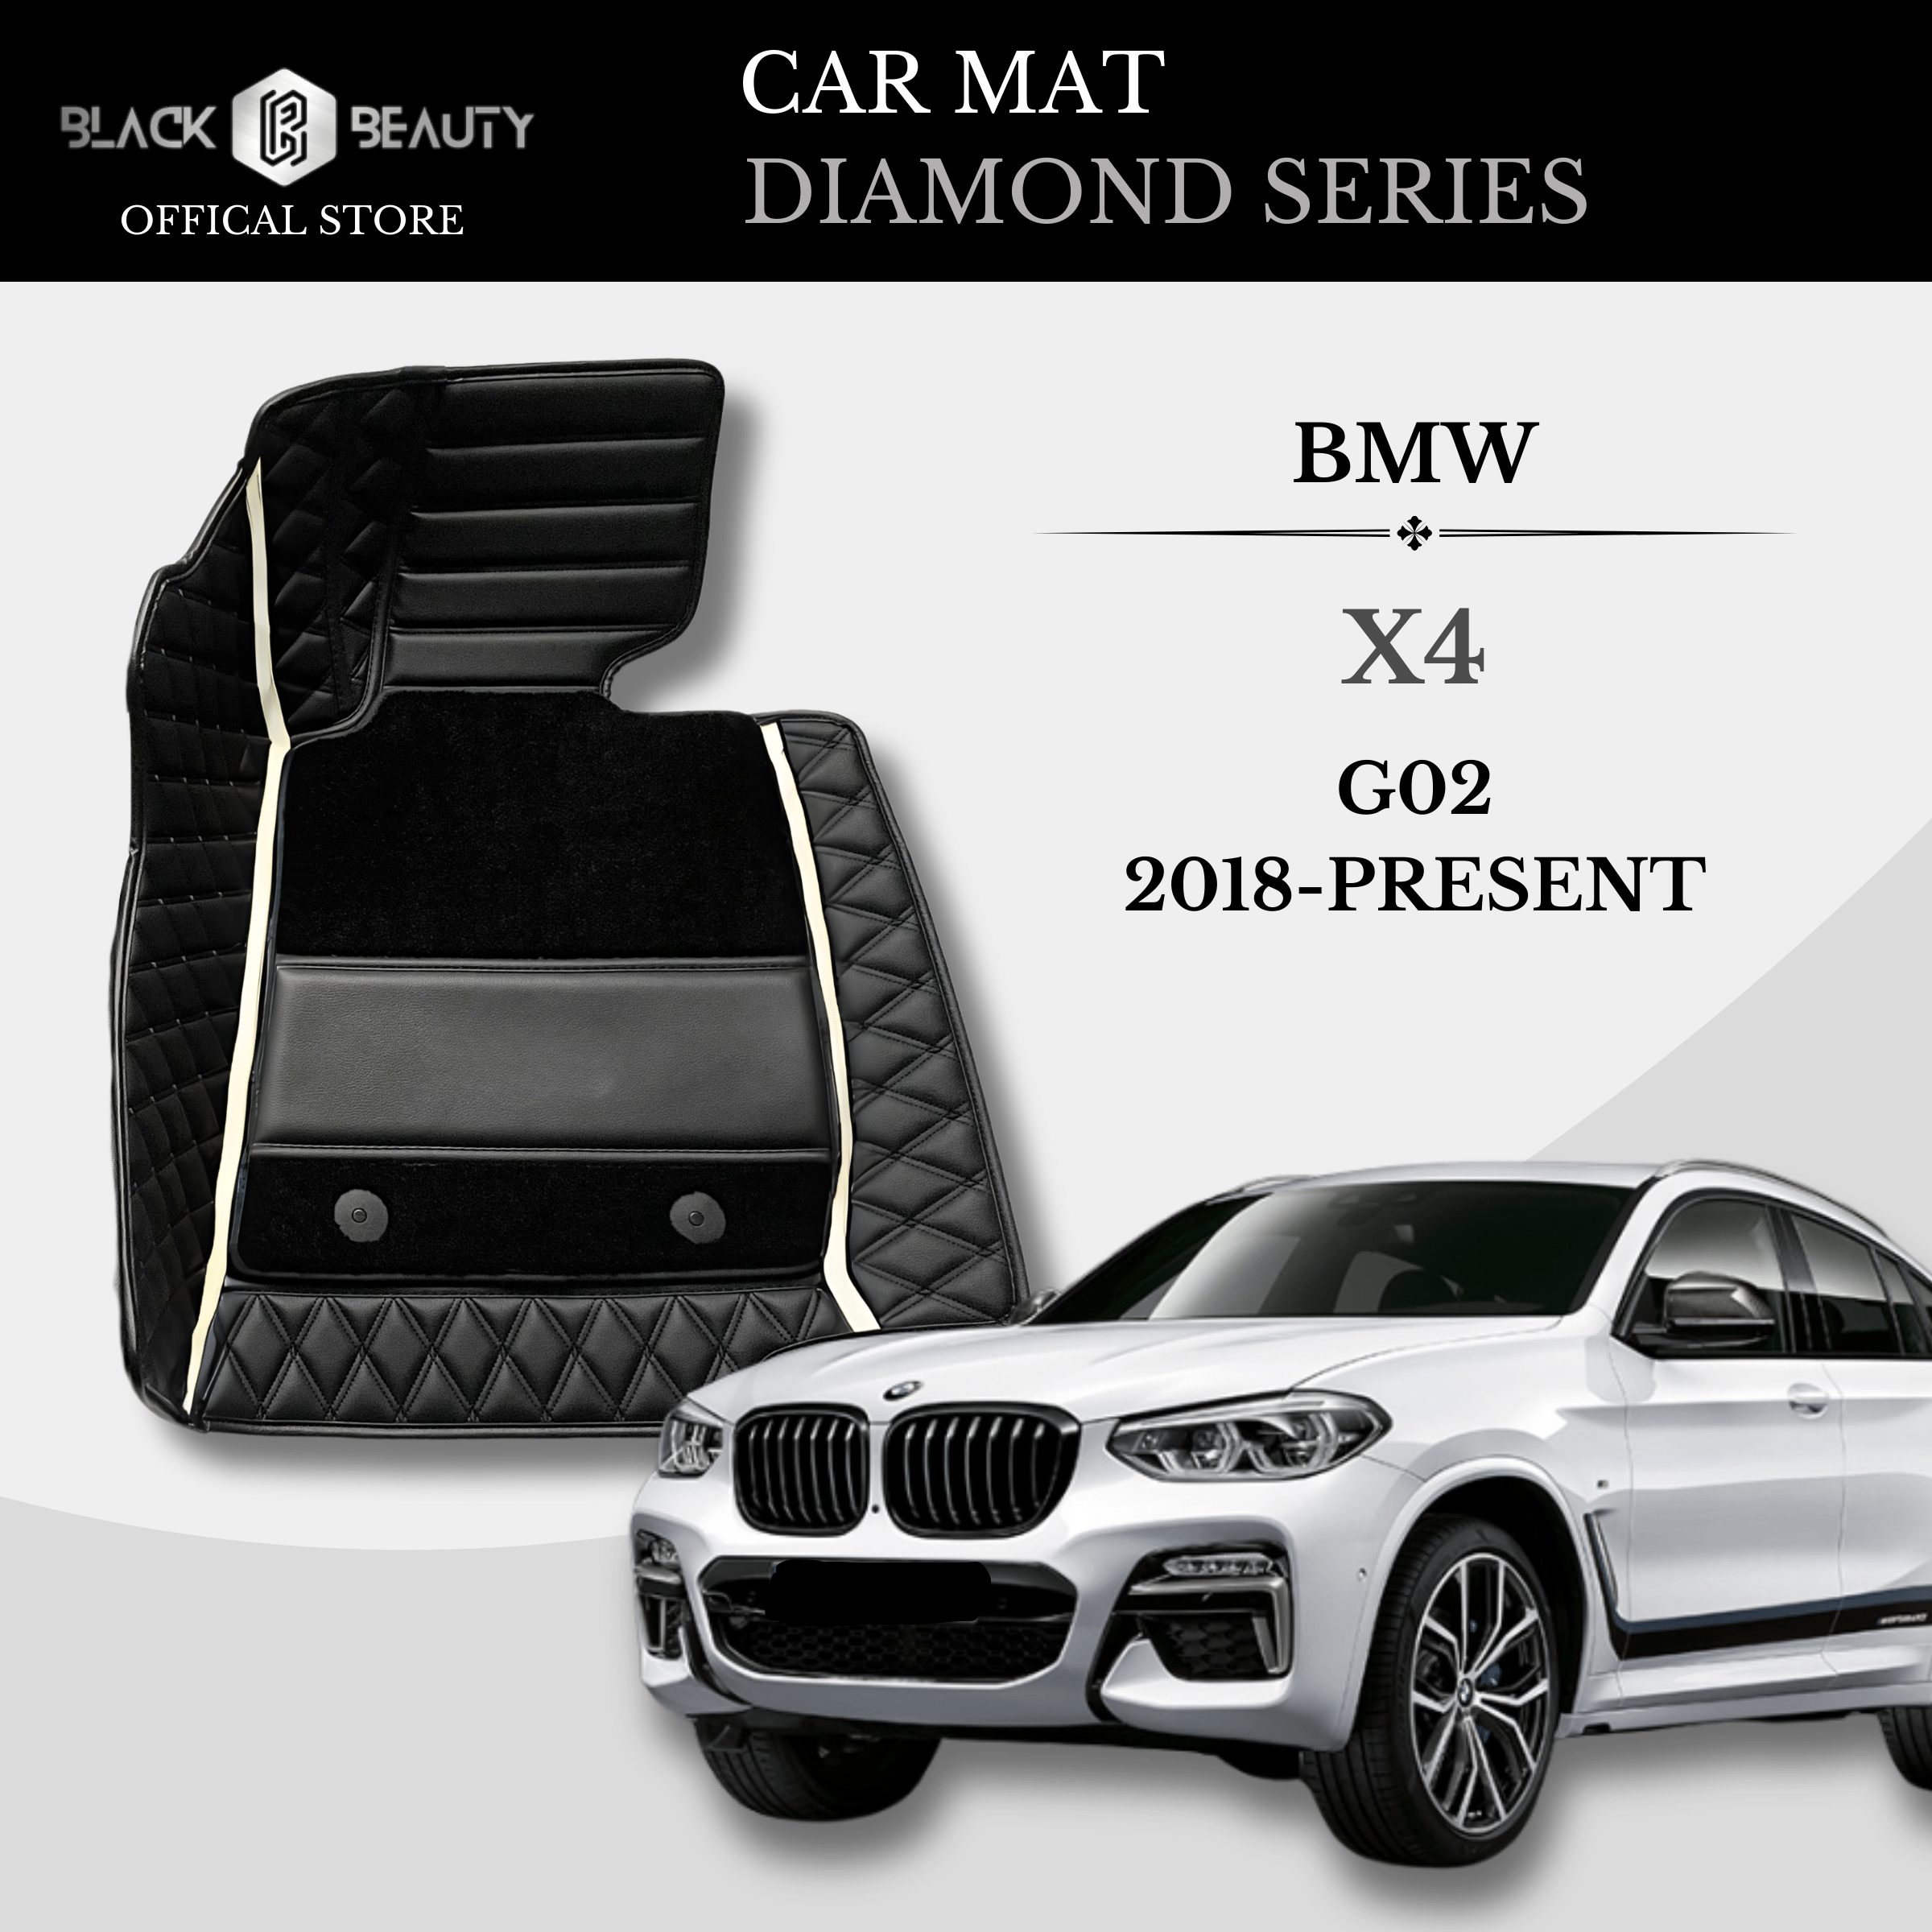 BMW X4 G02 (2018-Present) - Diamond Series Car Mat